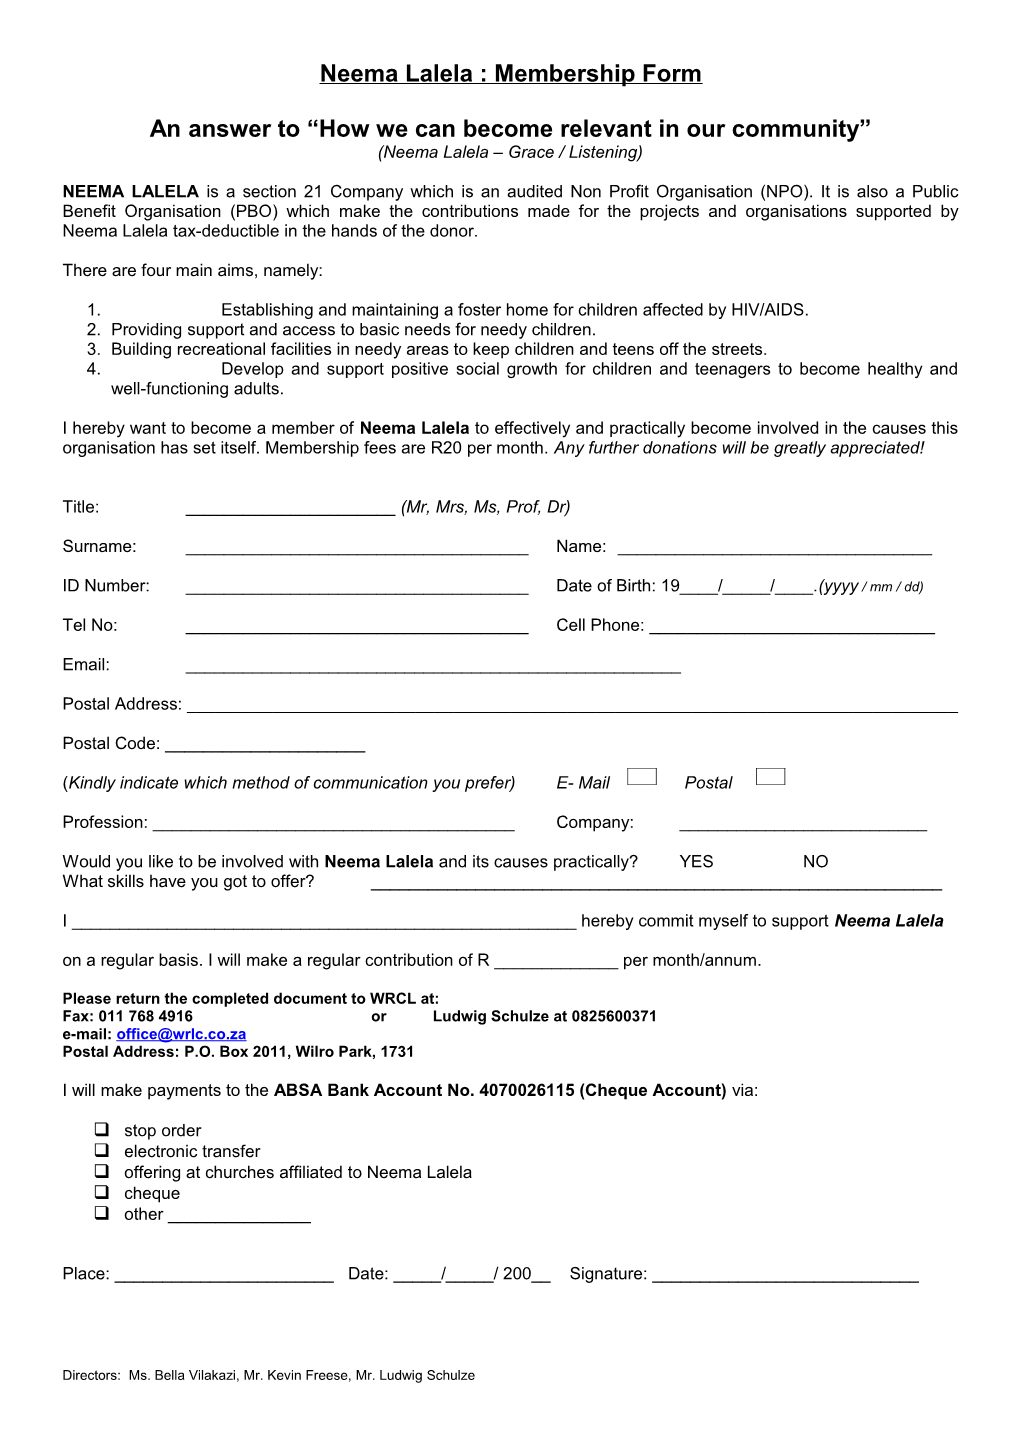 Neema Lalela Membership Form